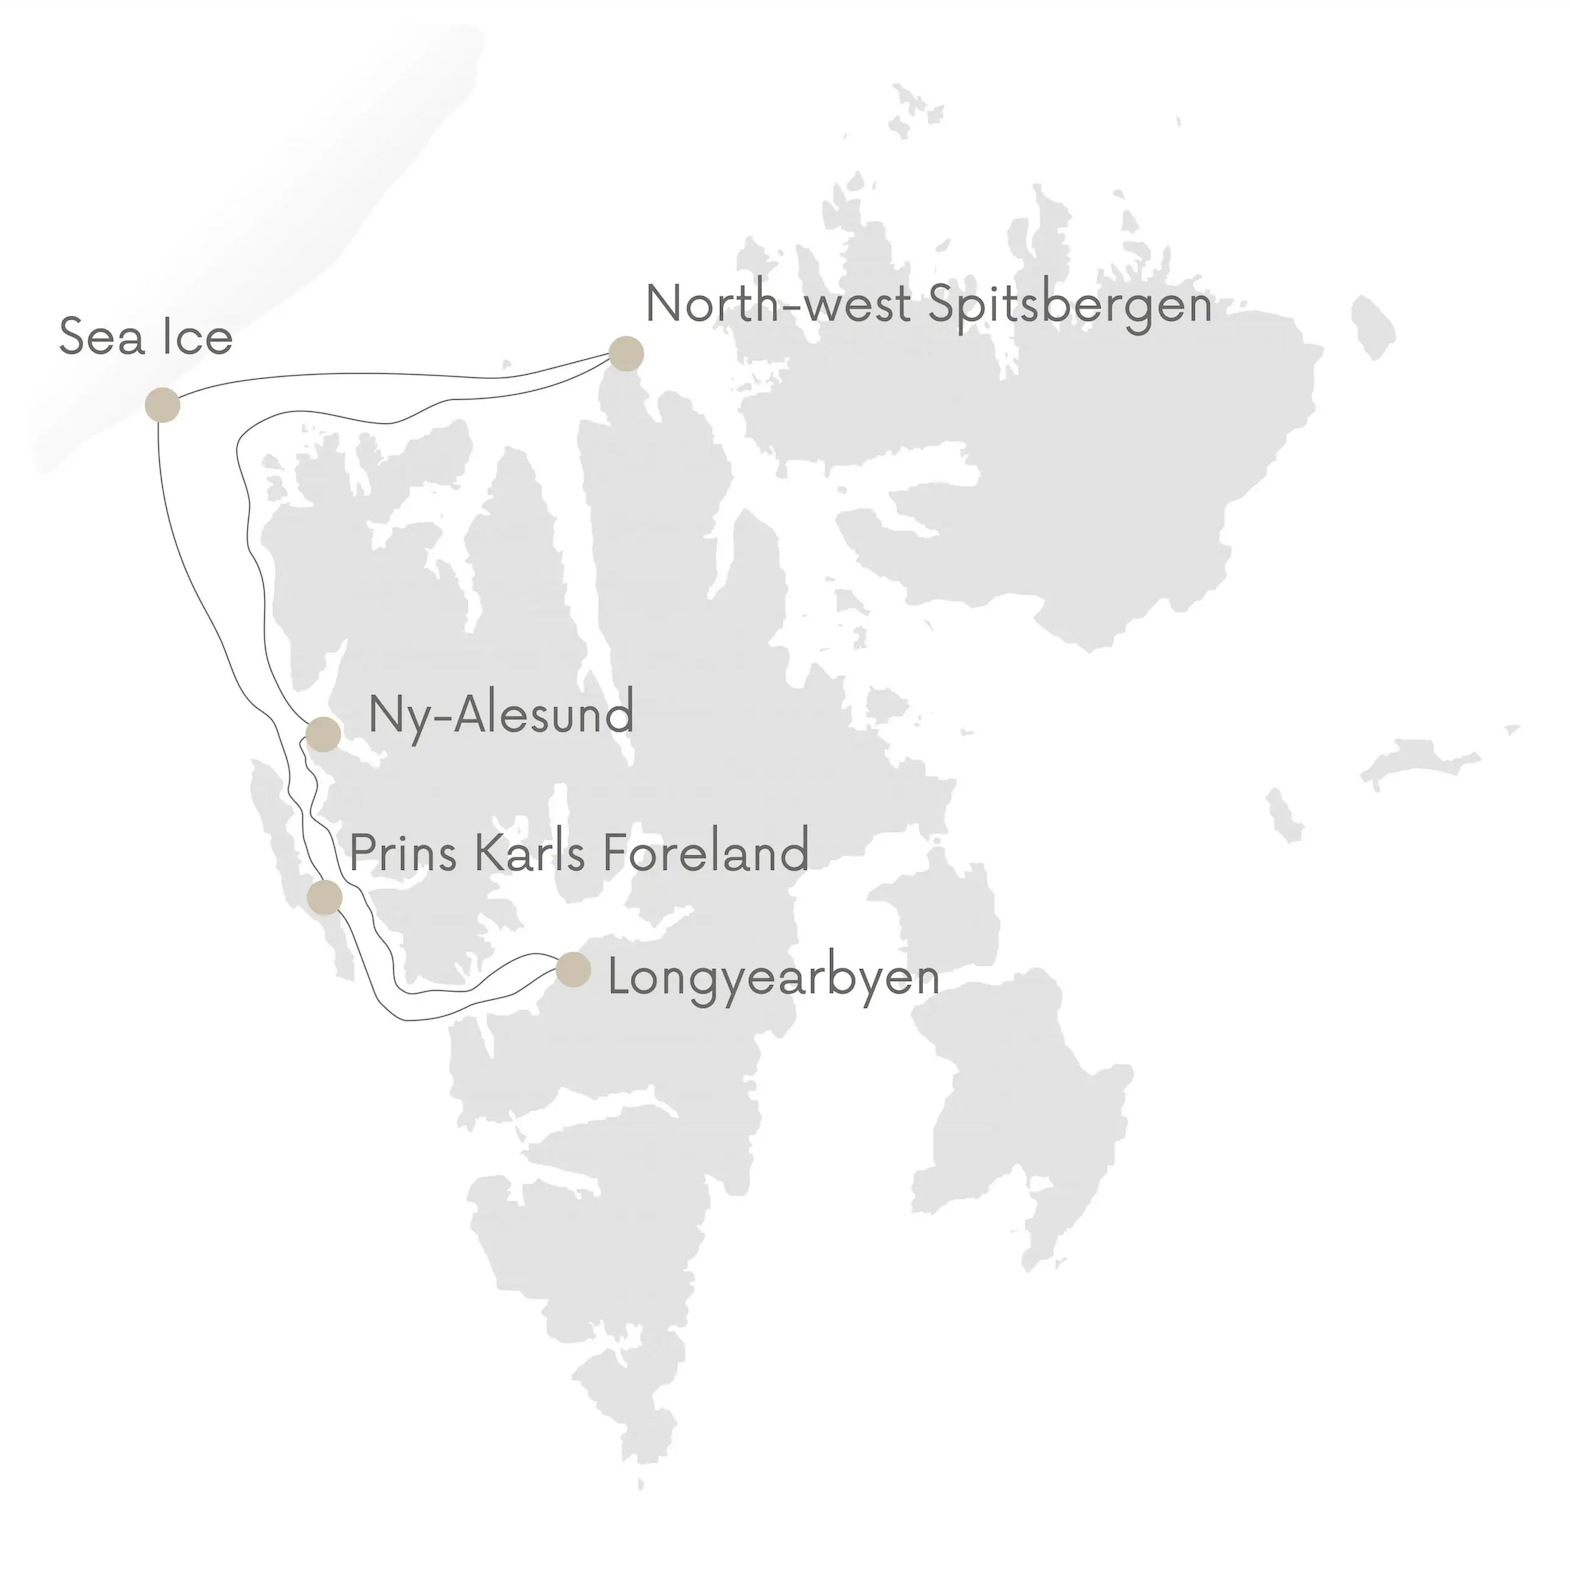 Map of Svalbard